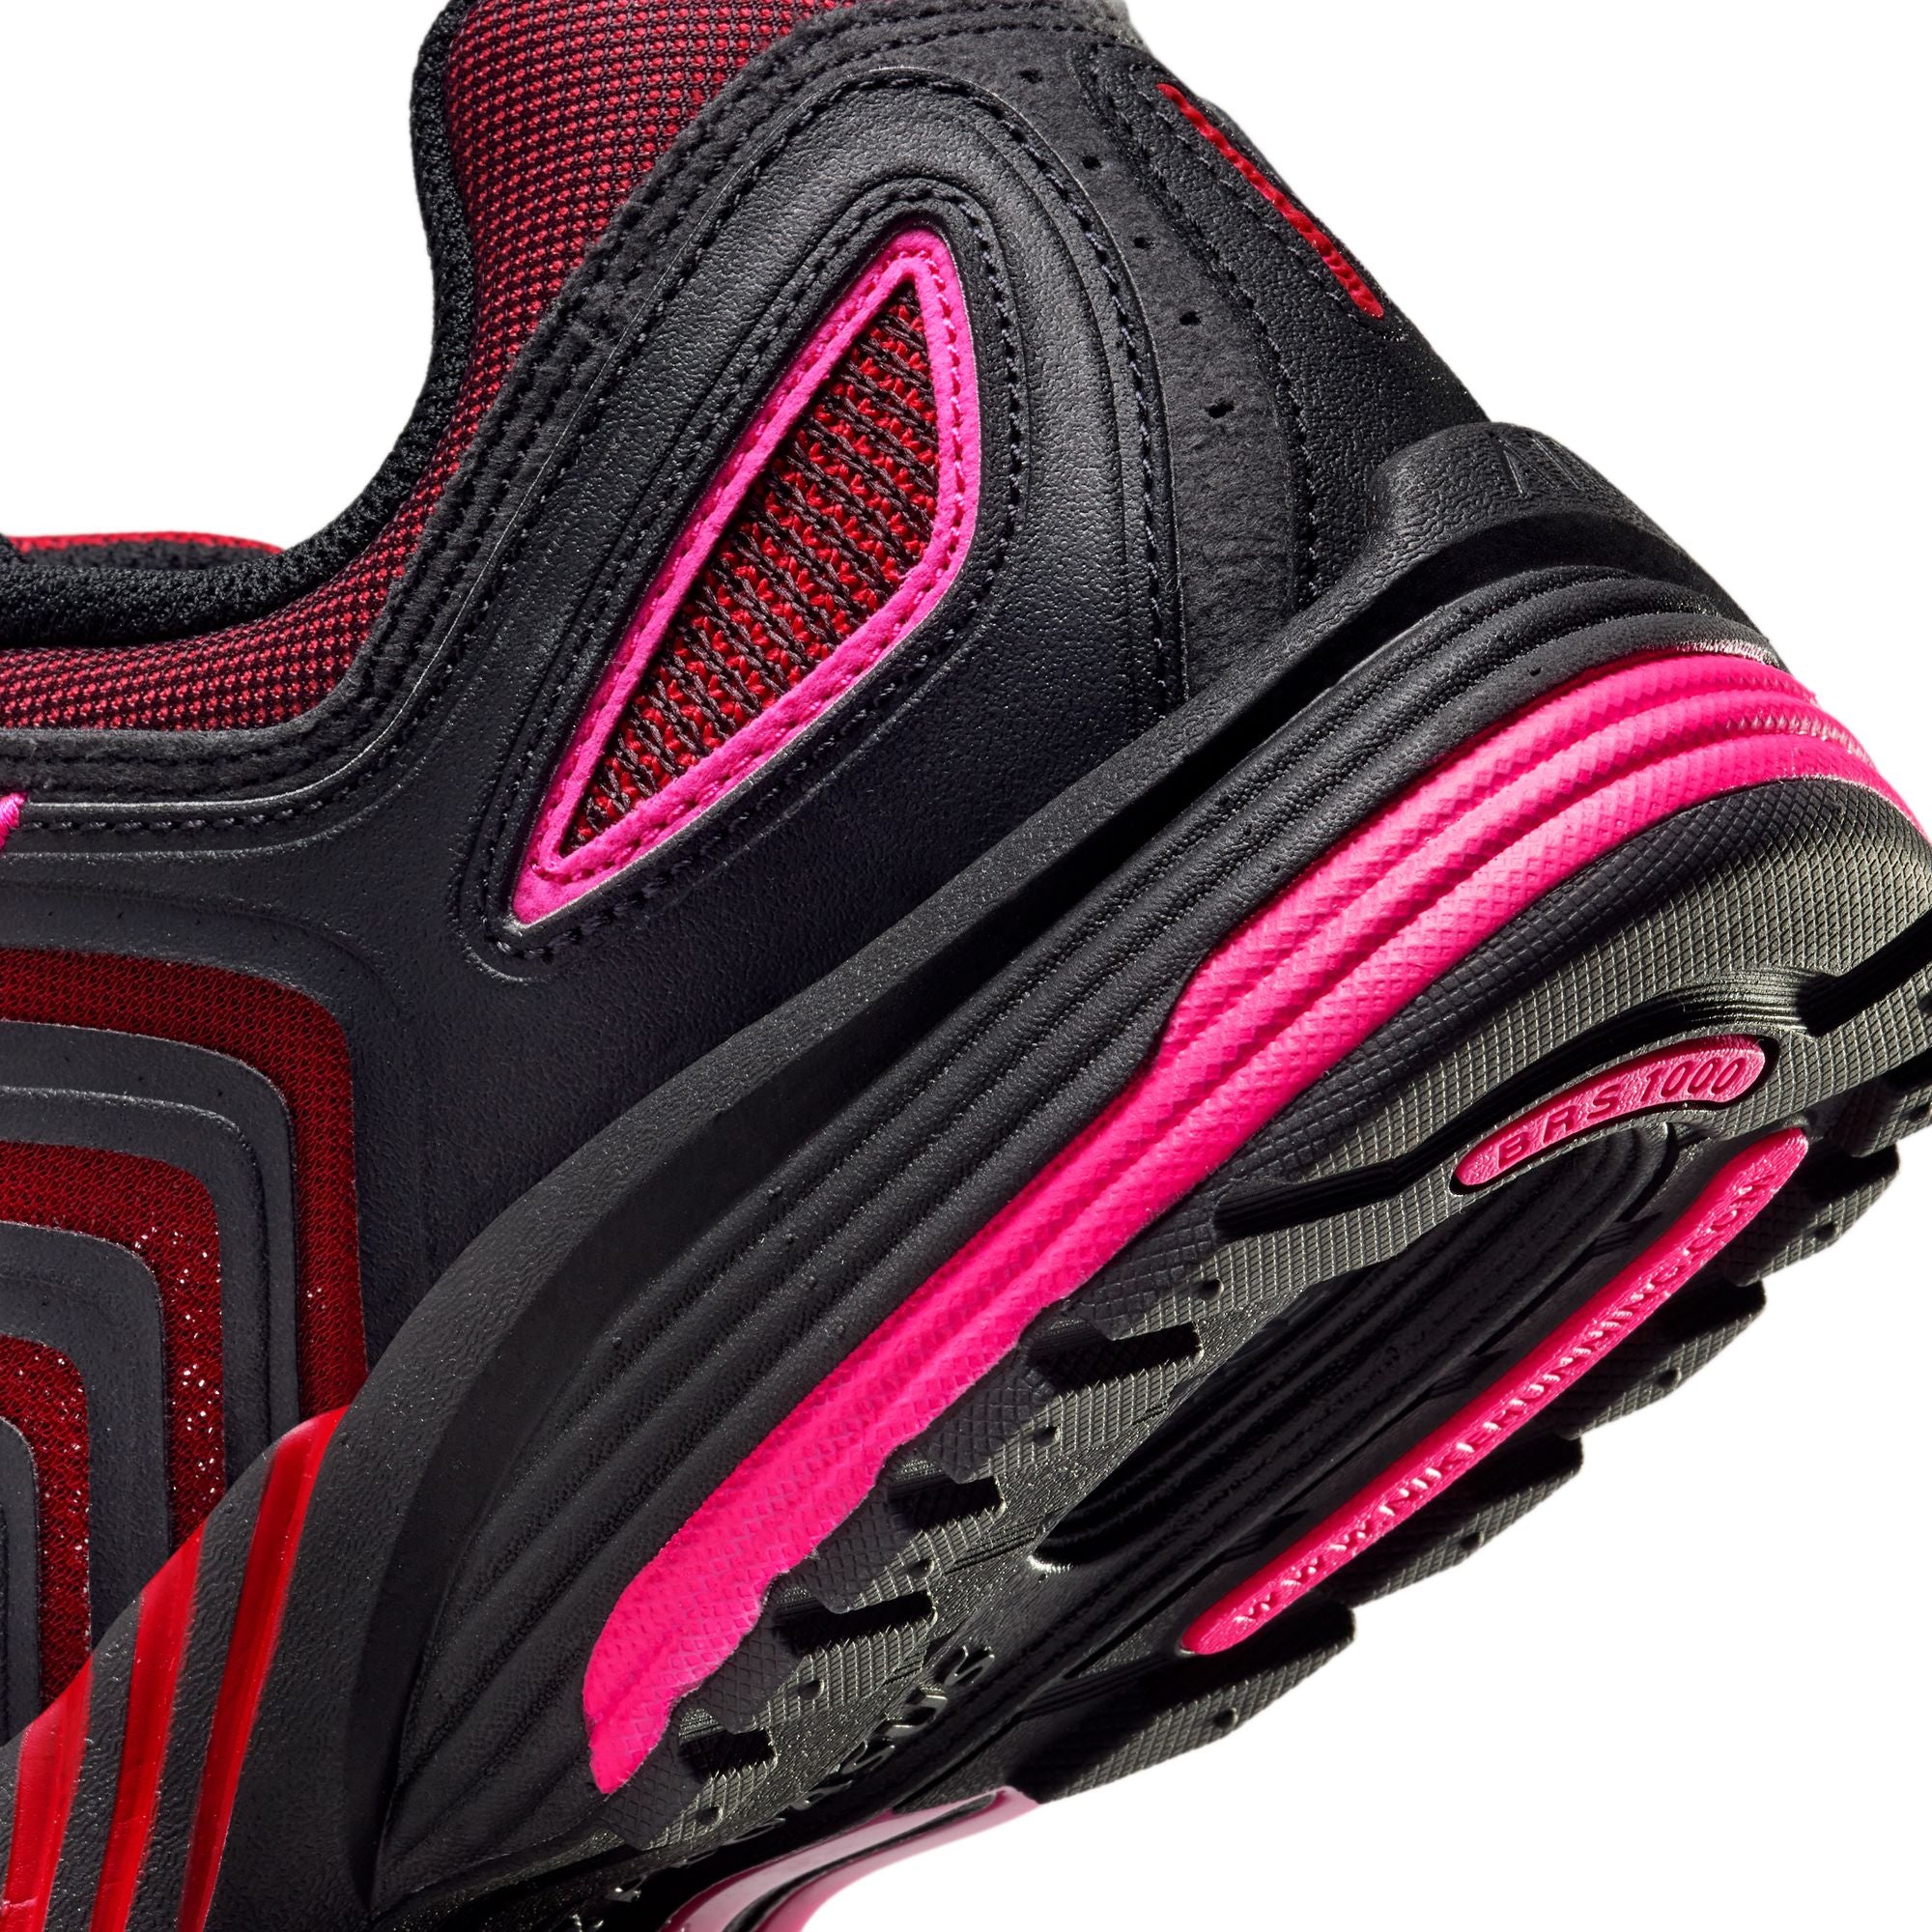 NIKE - Nike Air Peg 2K5 - (Black/Fire Red-Fierce Pink-Fie) view 10